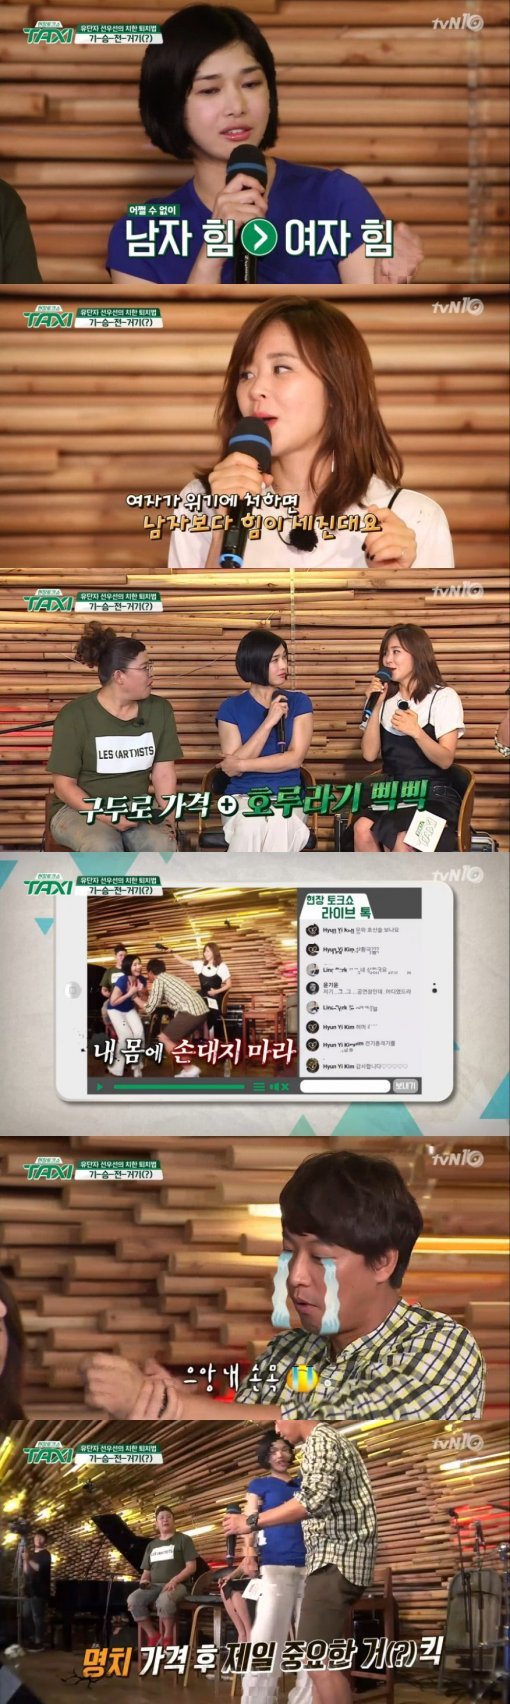 tvN ‘현장 토크쇼 택시’